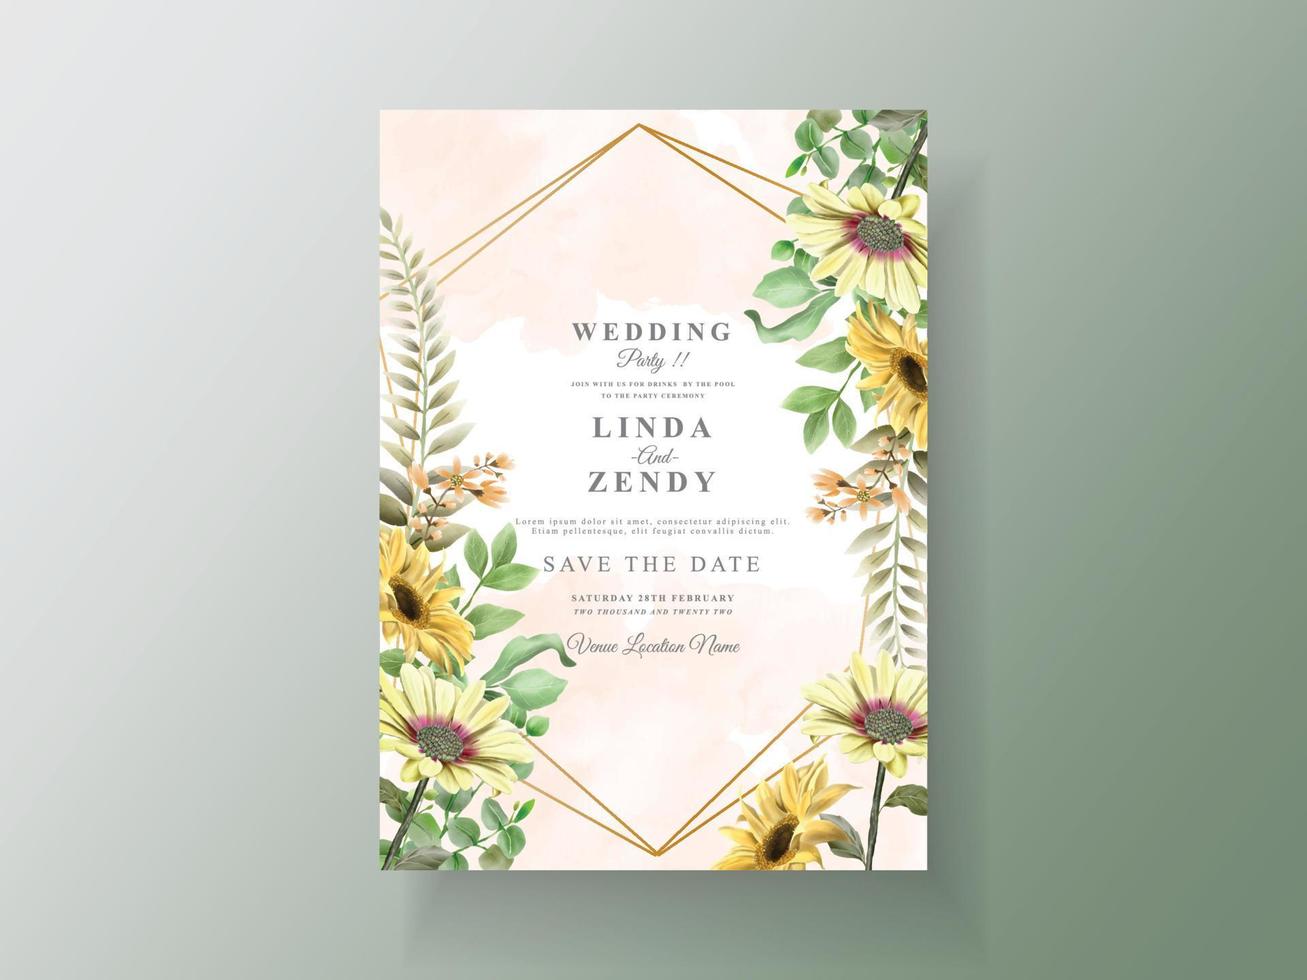 Floral tropical wedding invitation cards vector